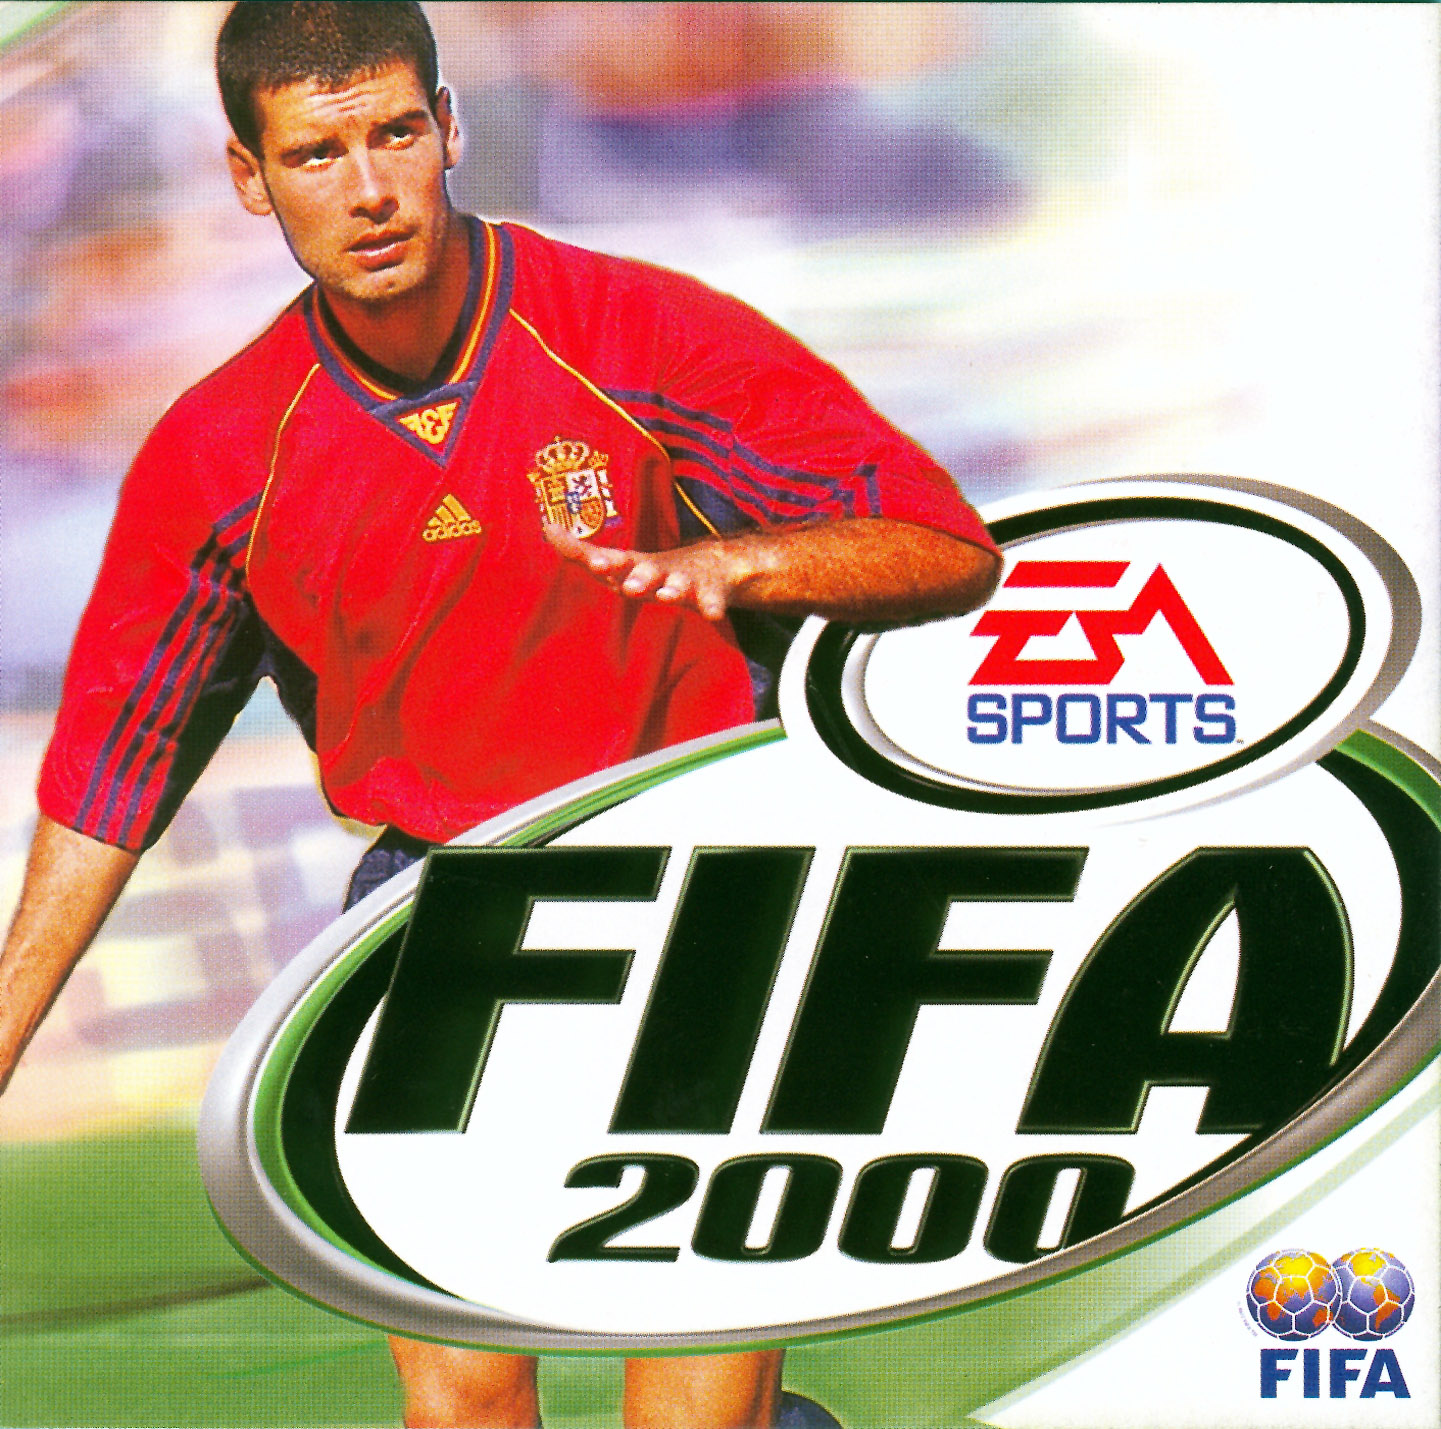 FIFA 2000 - Wikipedia, PDF